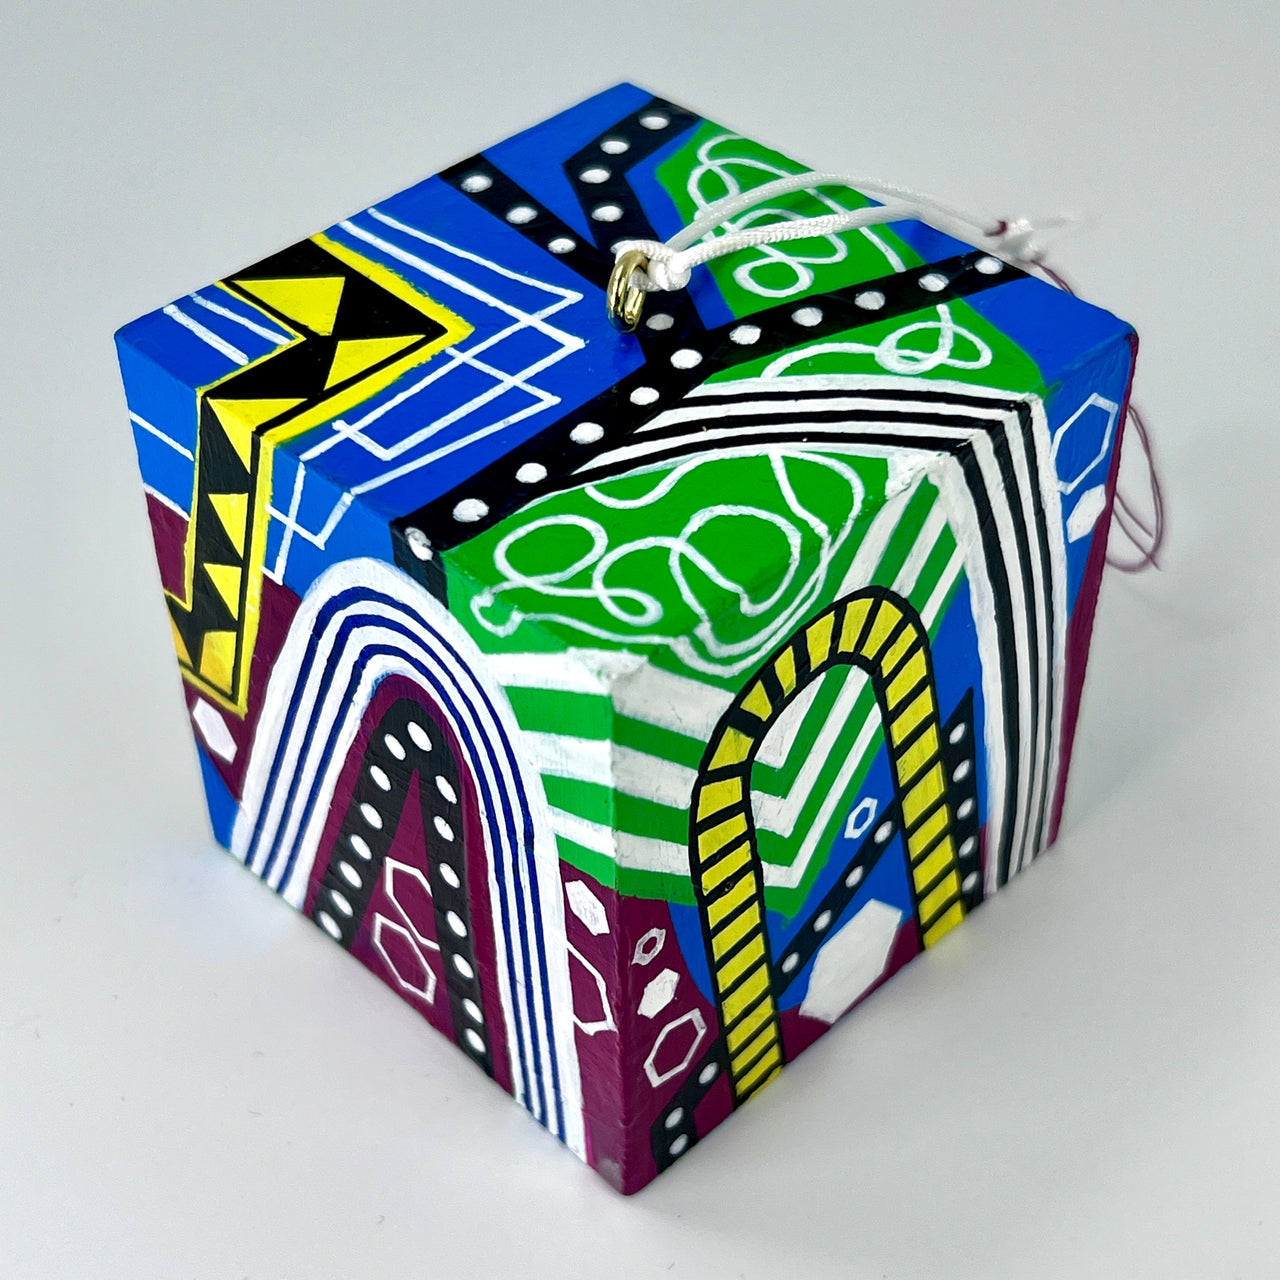 #22 - 3D Cube Art - 2.25" cube